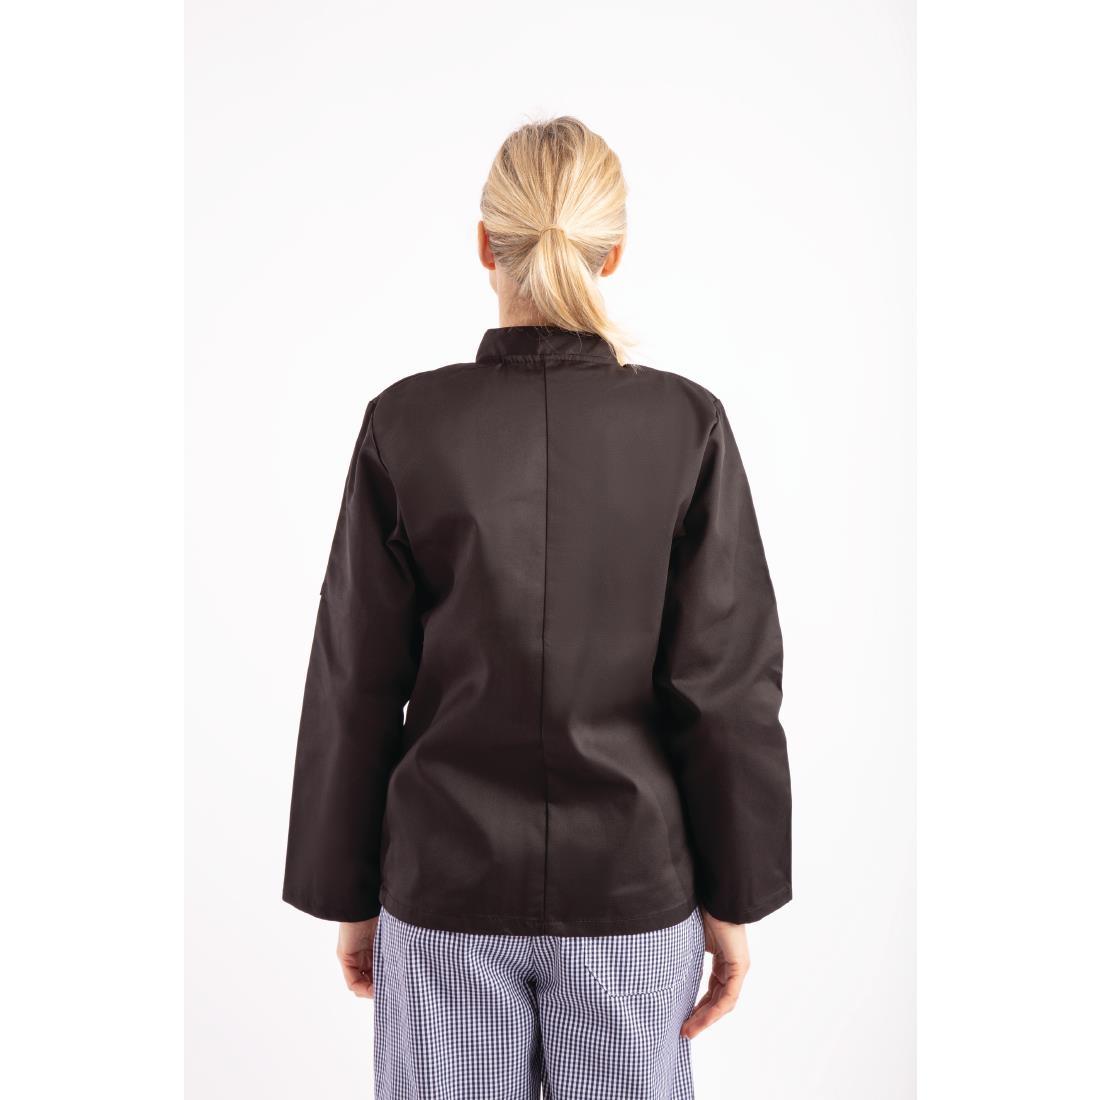 Whites Vegas Unisex Chefs Jacket Long Sleeve Black S - A438-S  - 10